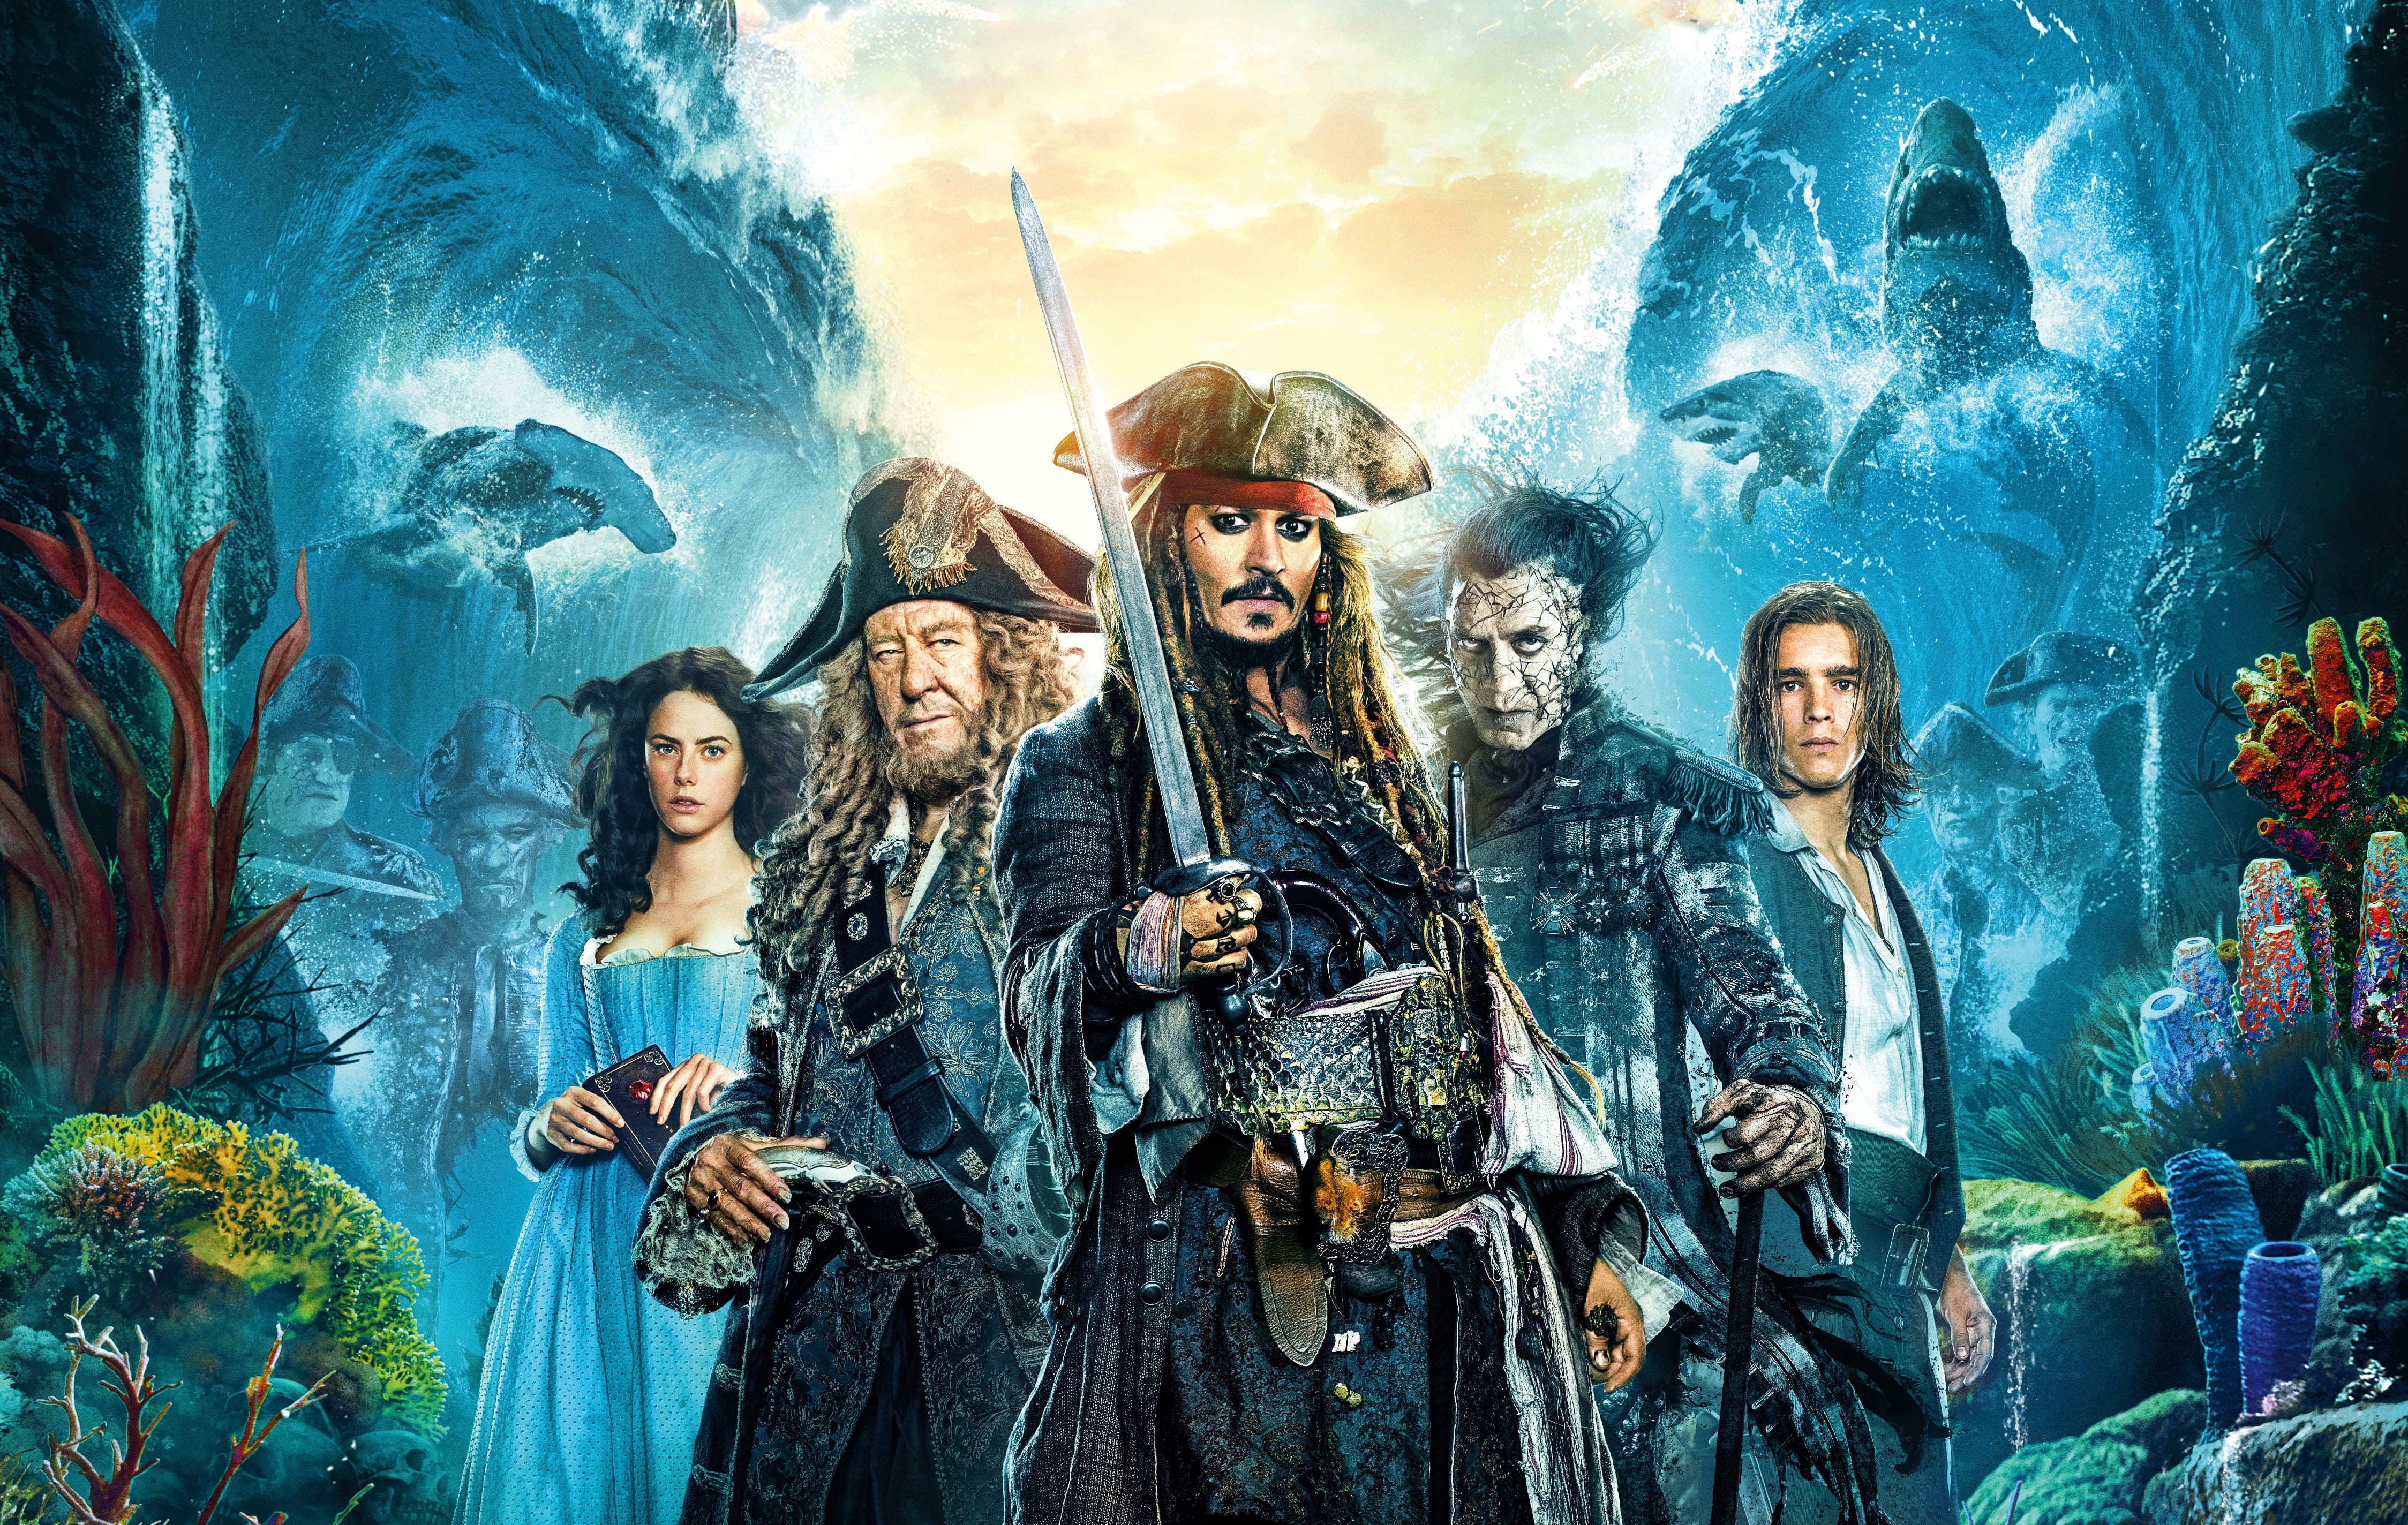 People 4496x2848 Pirates of the Caribbean: Dead Men Tell No Tales Pirates of the Caribbean movies Hector Barbossa Jack Sparrow Johnny Depp Geoffrey Rush digital art